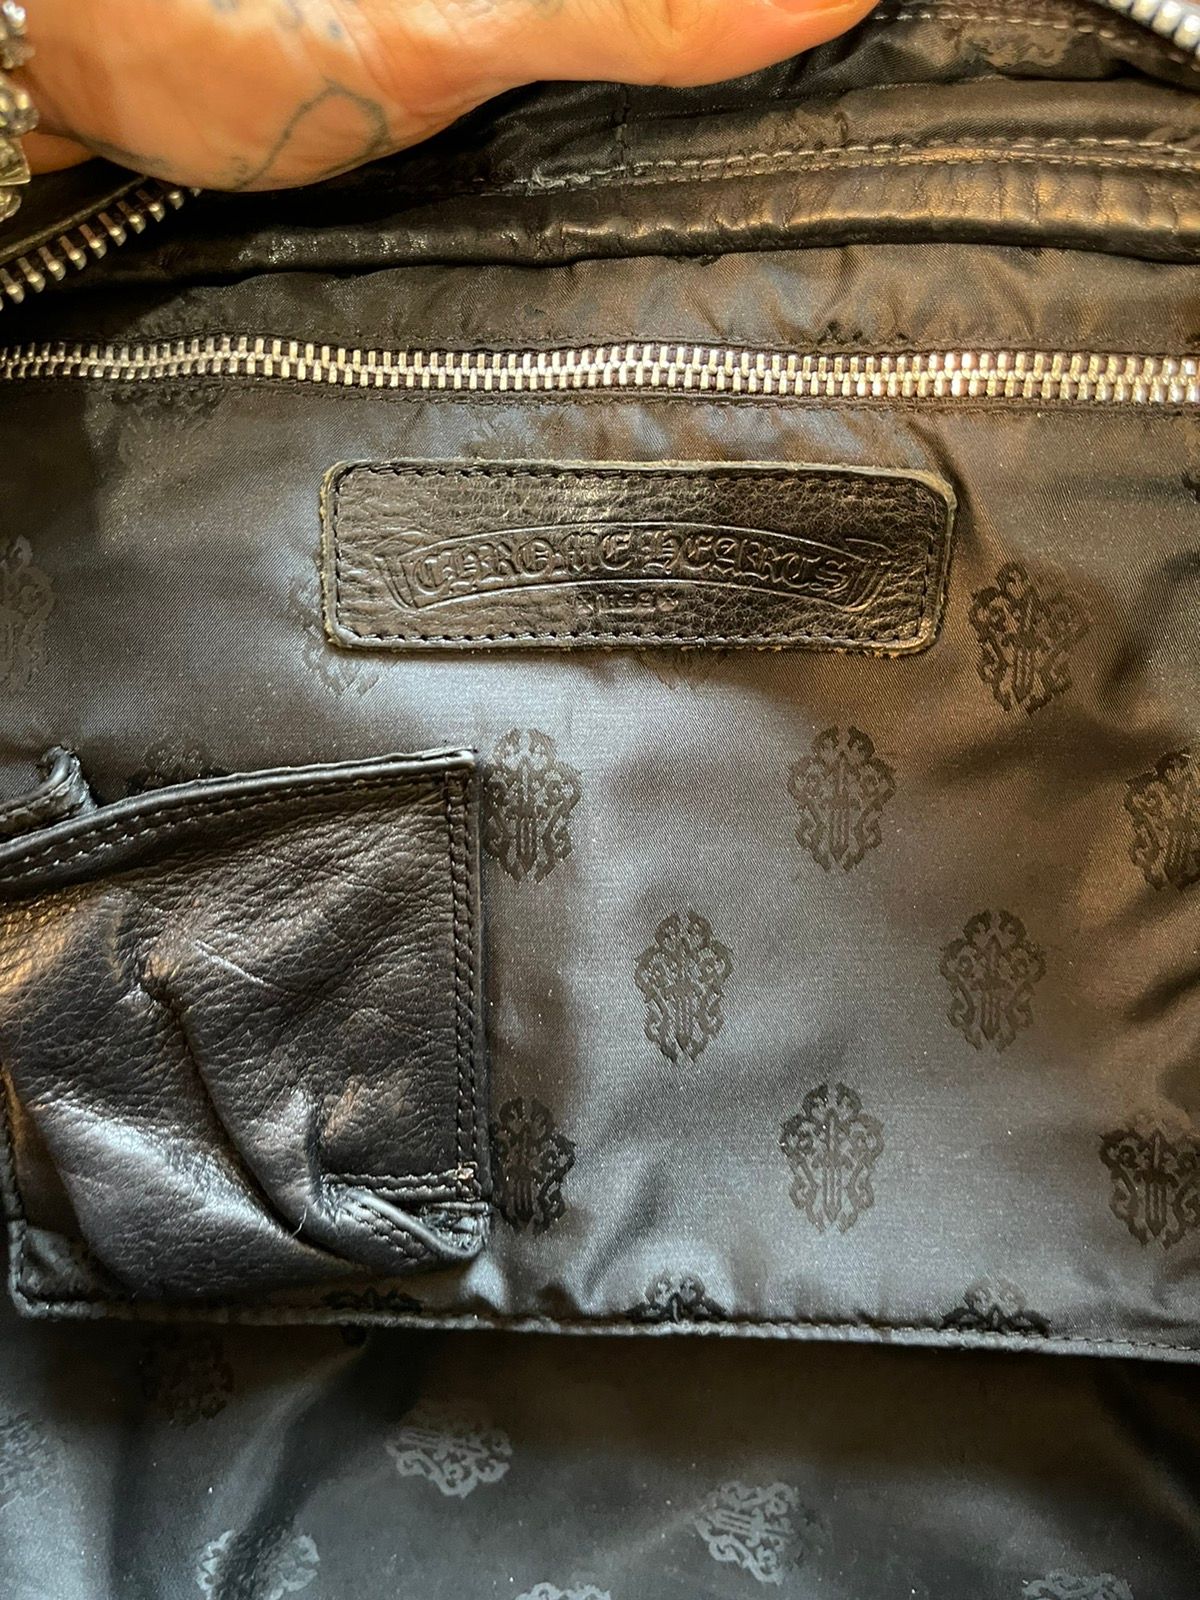 Chrome Hearts 14 Crosses Leather Duffle Travel Bag